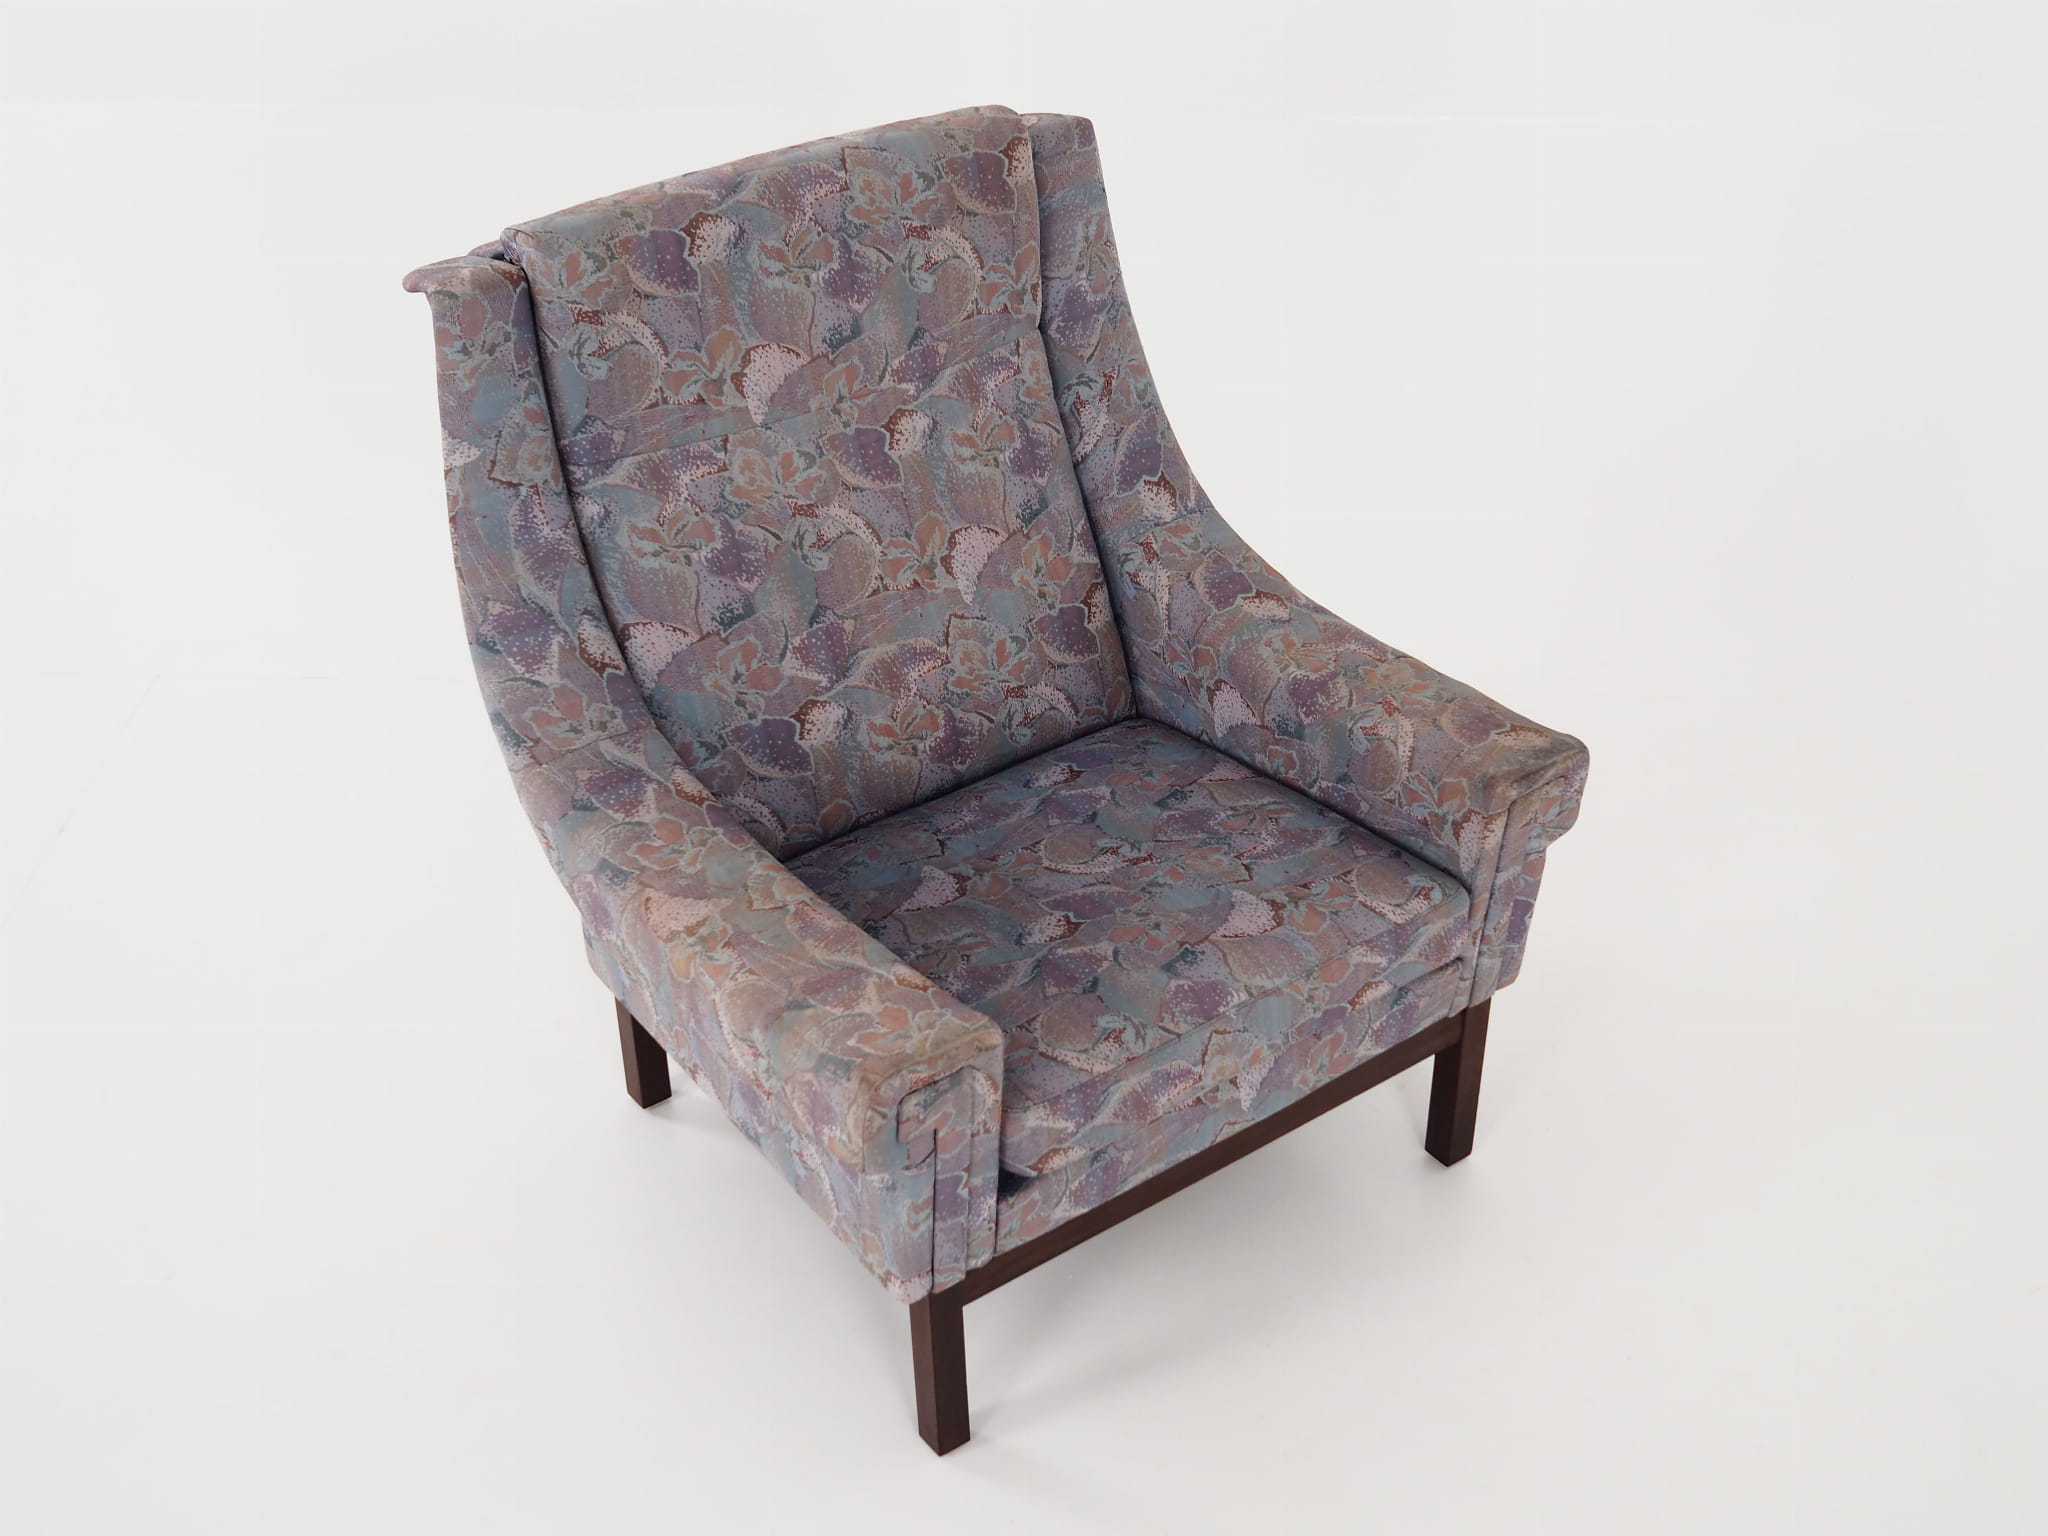 Vintage Sessel Buchenholz Textil Violett 1960er Jahre